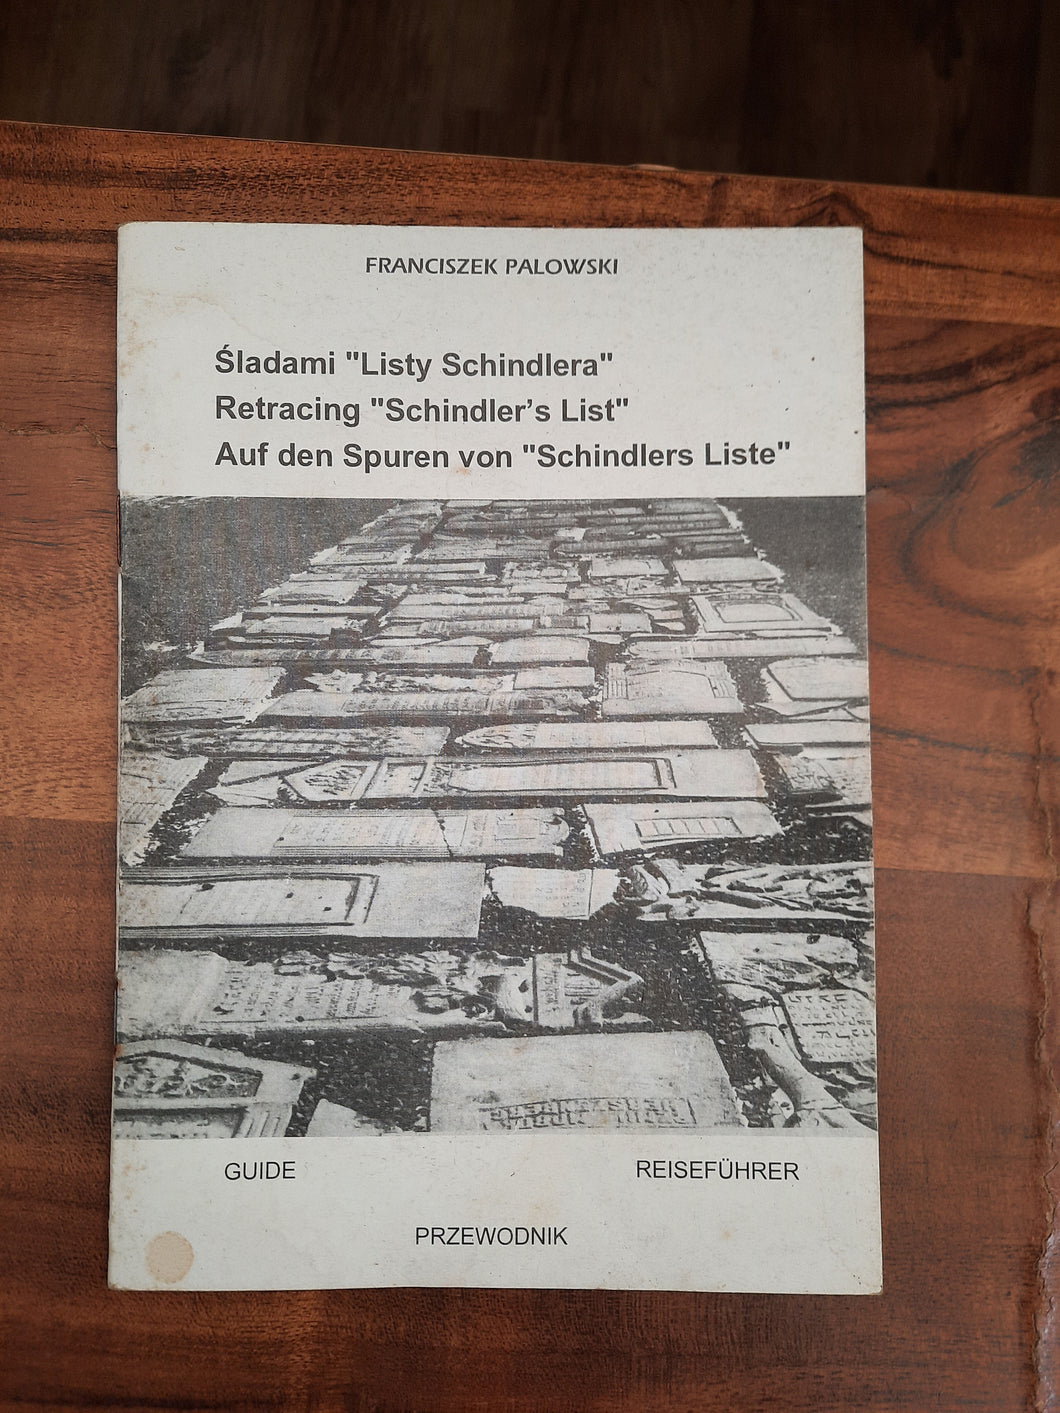 Book retracting Schindlers list guide